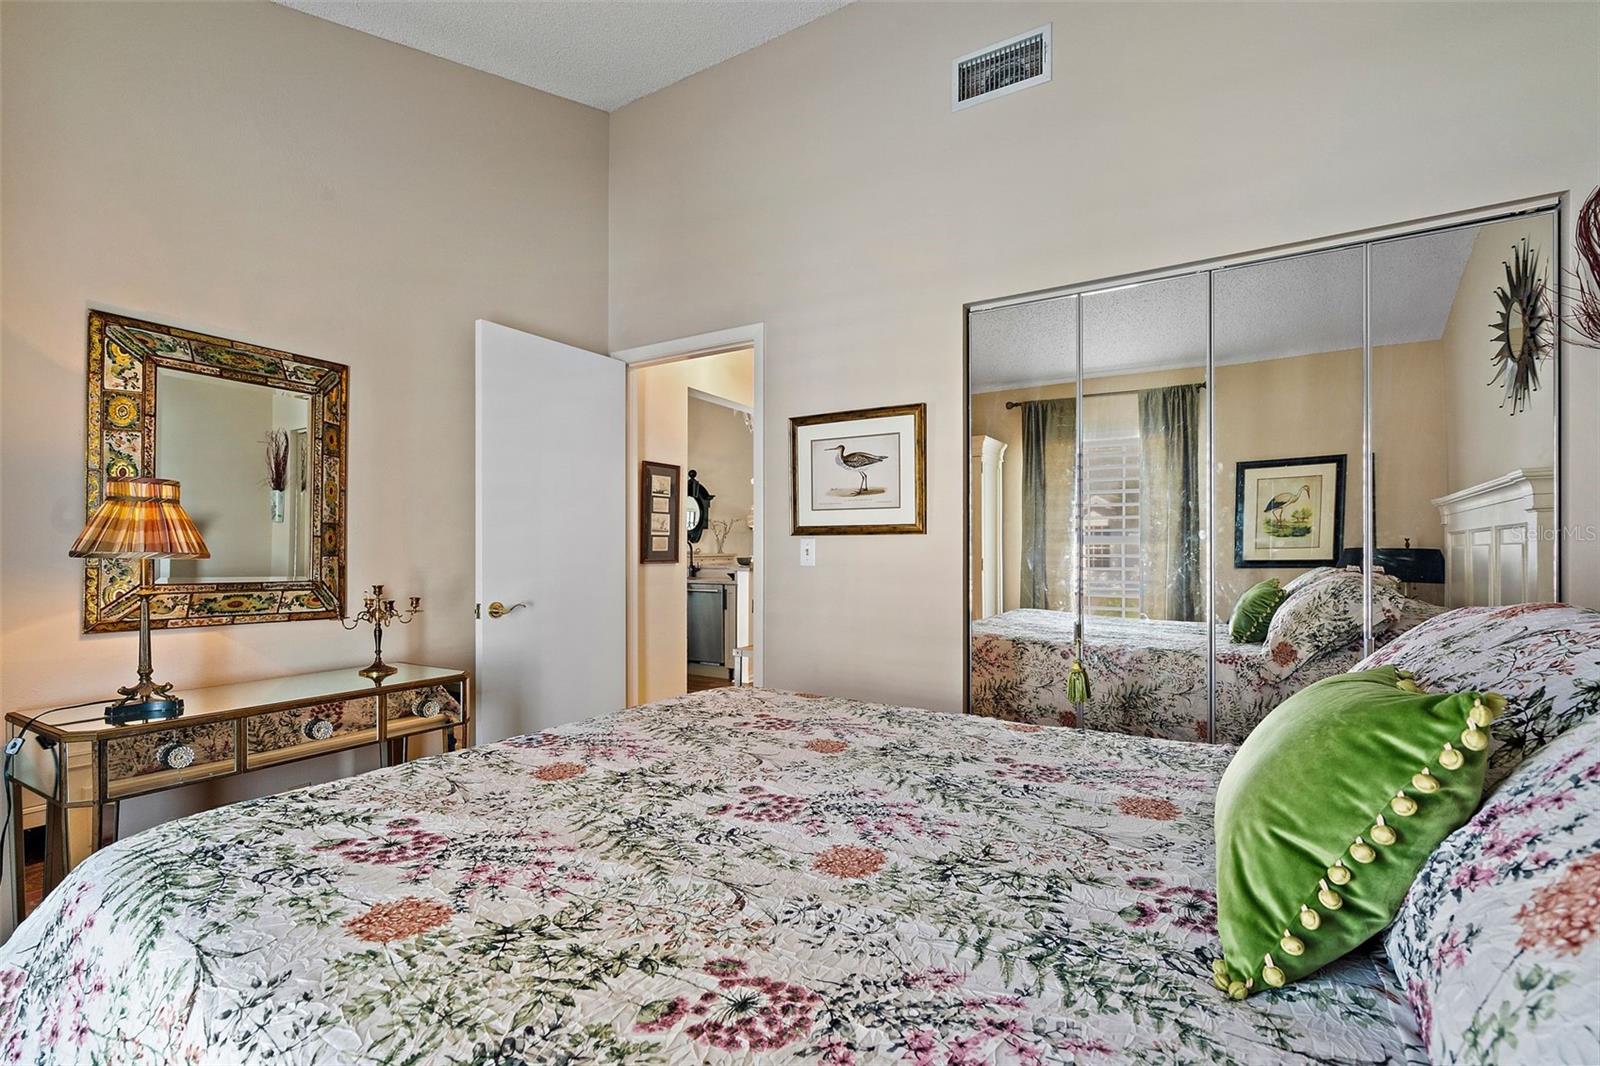 Guests Enjoy the Privacy of the Split Bedroom Floorplan